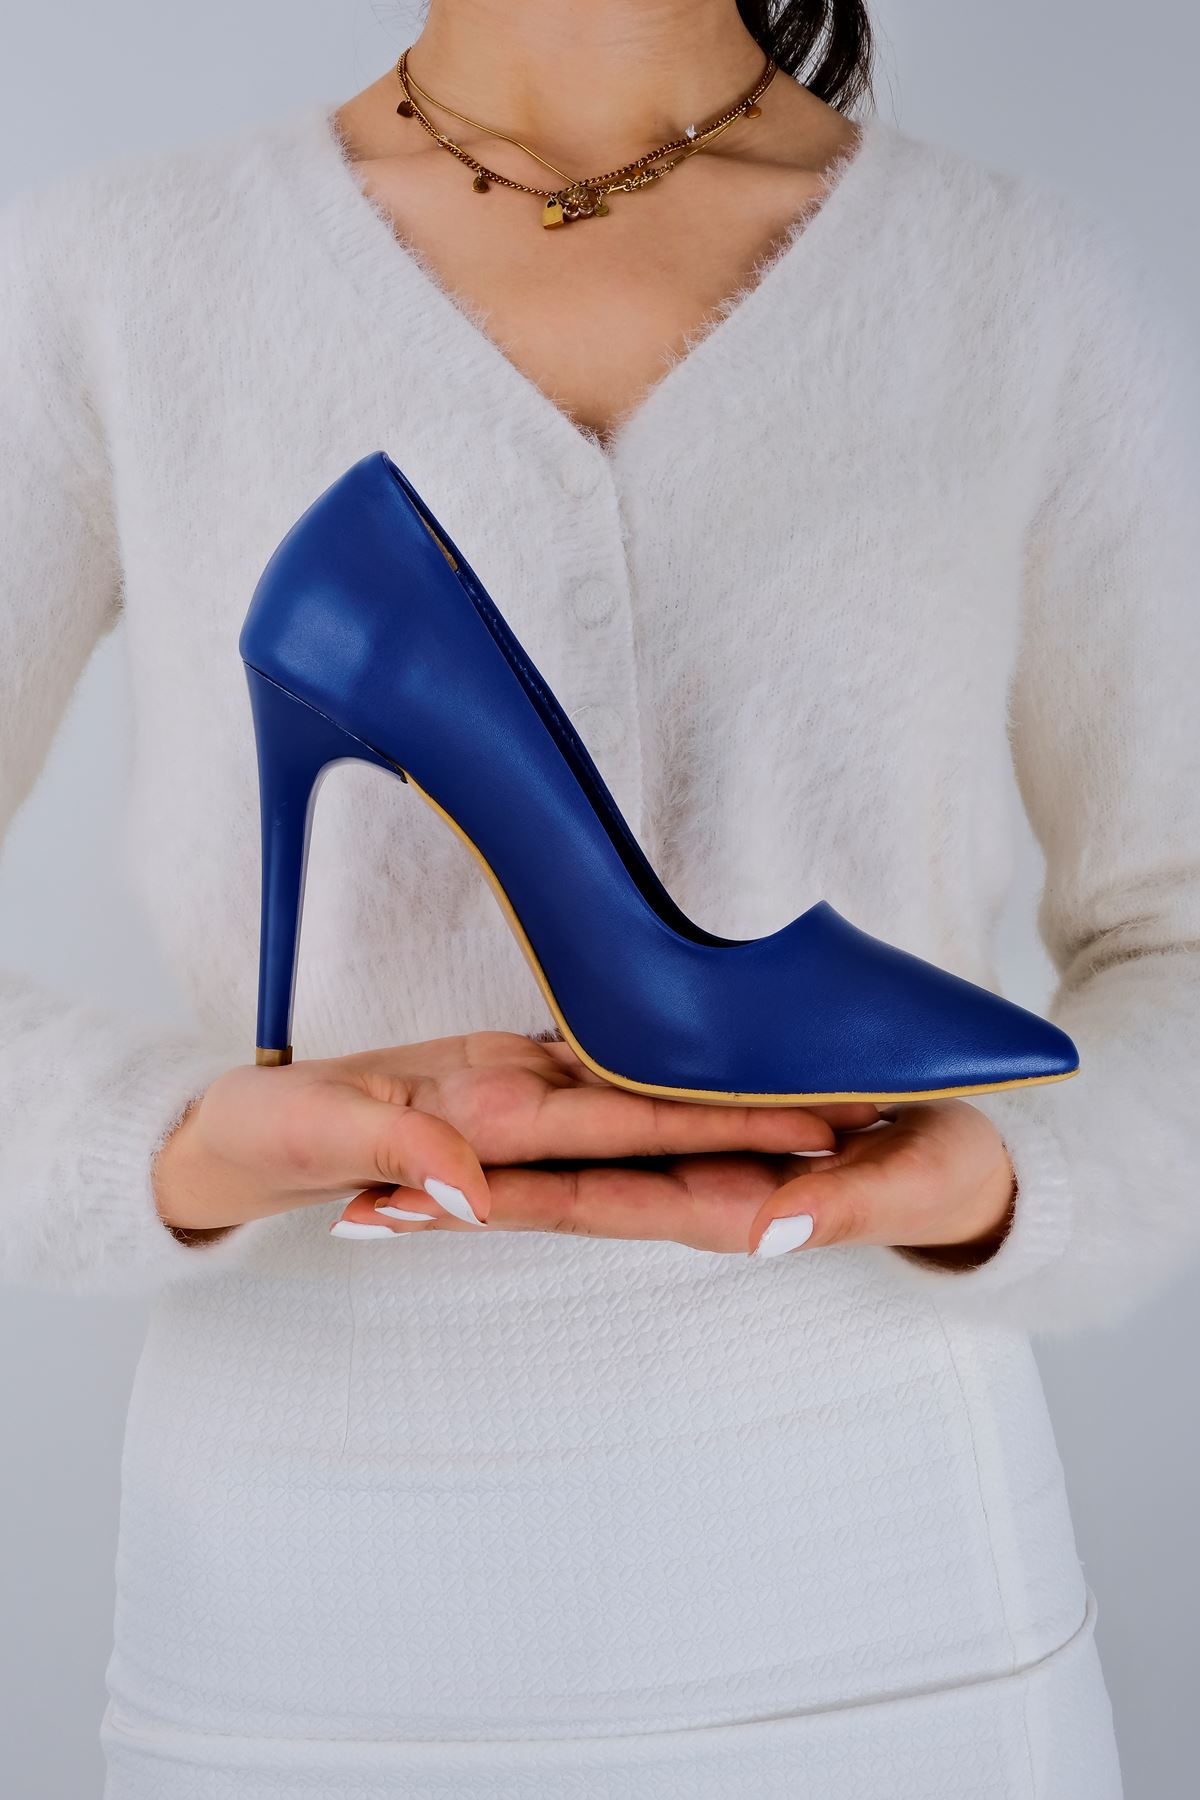 Diamond Kadın Stiletto Topuklu Ayakkabı-Lacivert